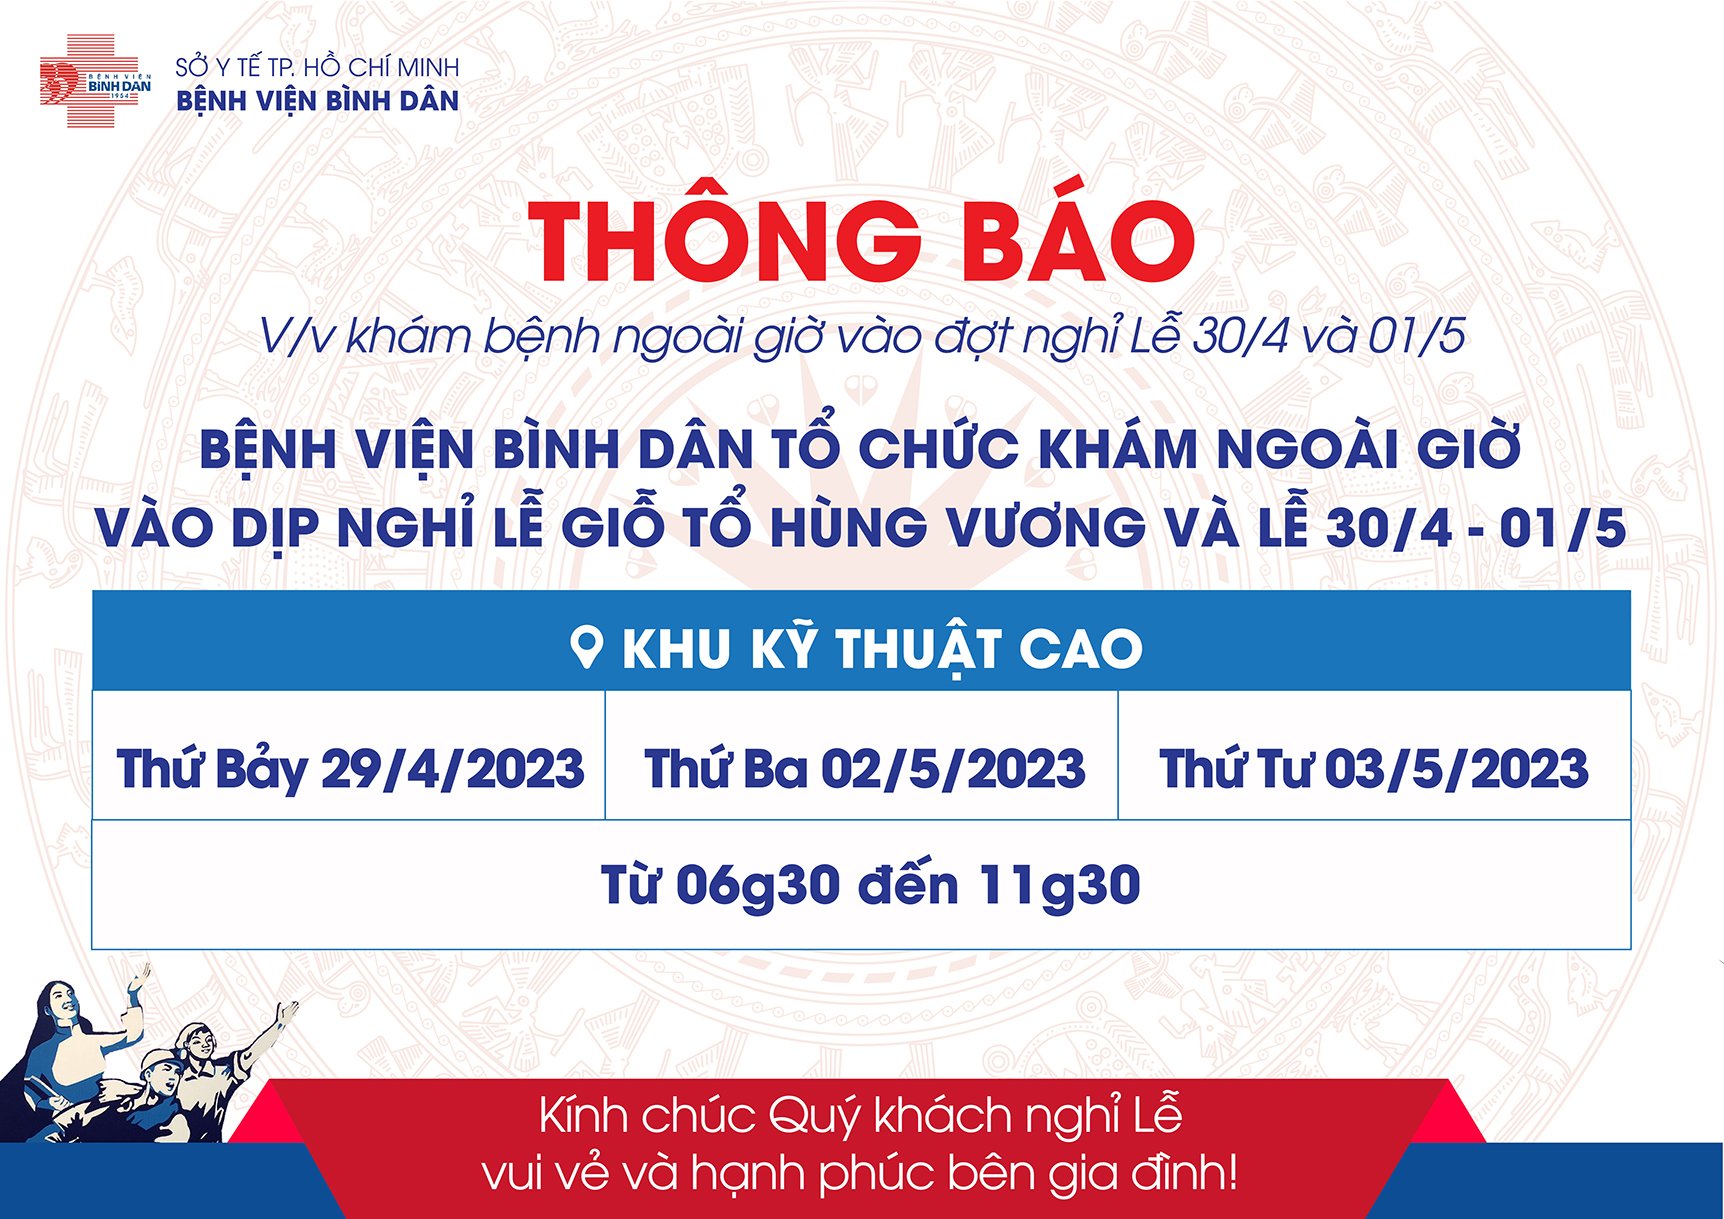 THONG_BAO_KHAM_NGOAI_GIO_DIP_LE_30.4__1.5